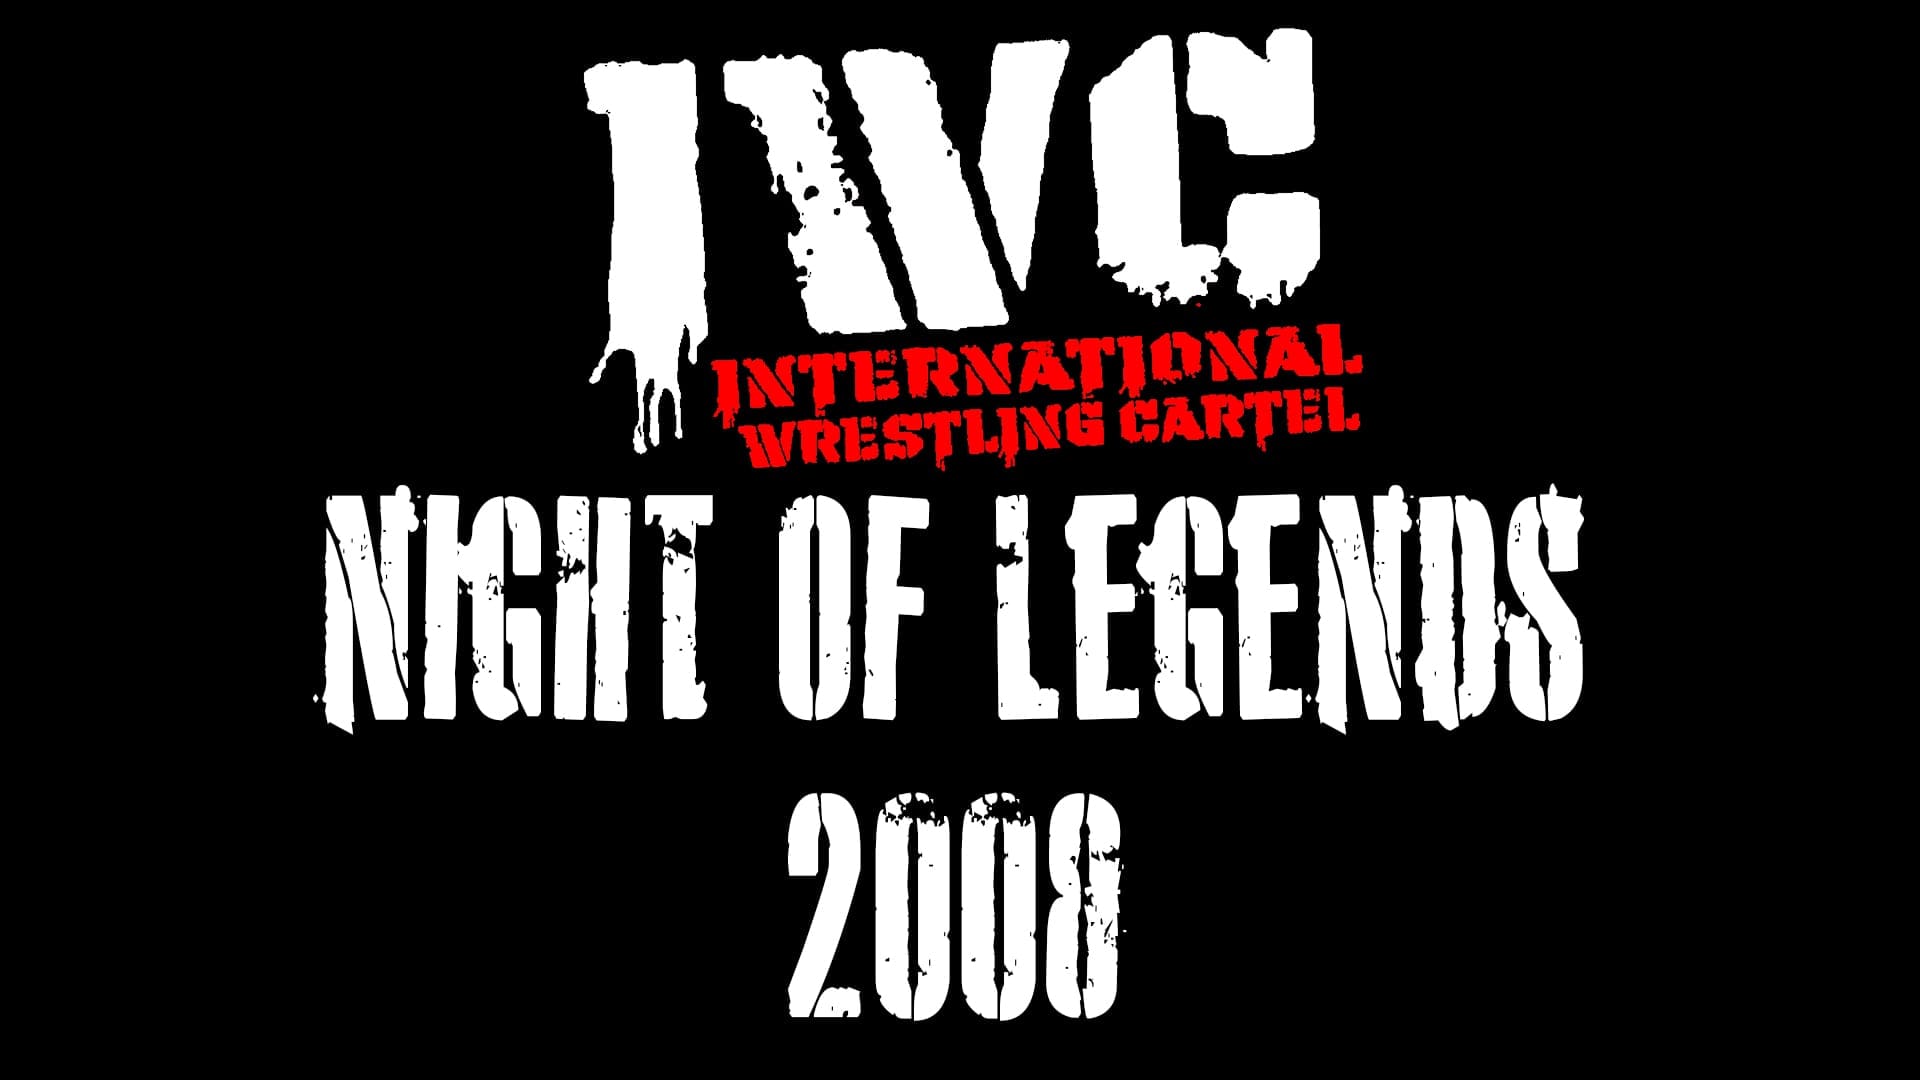 Night of Legends 2008